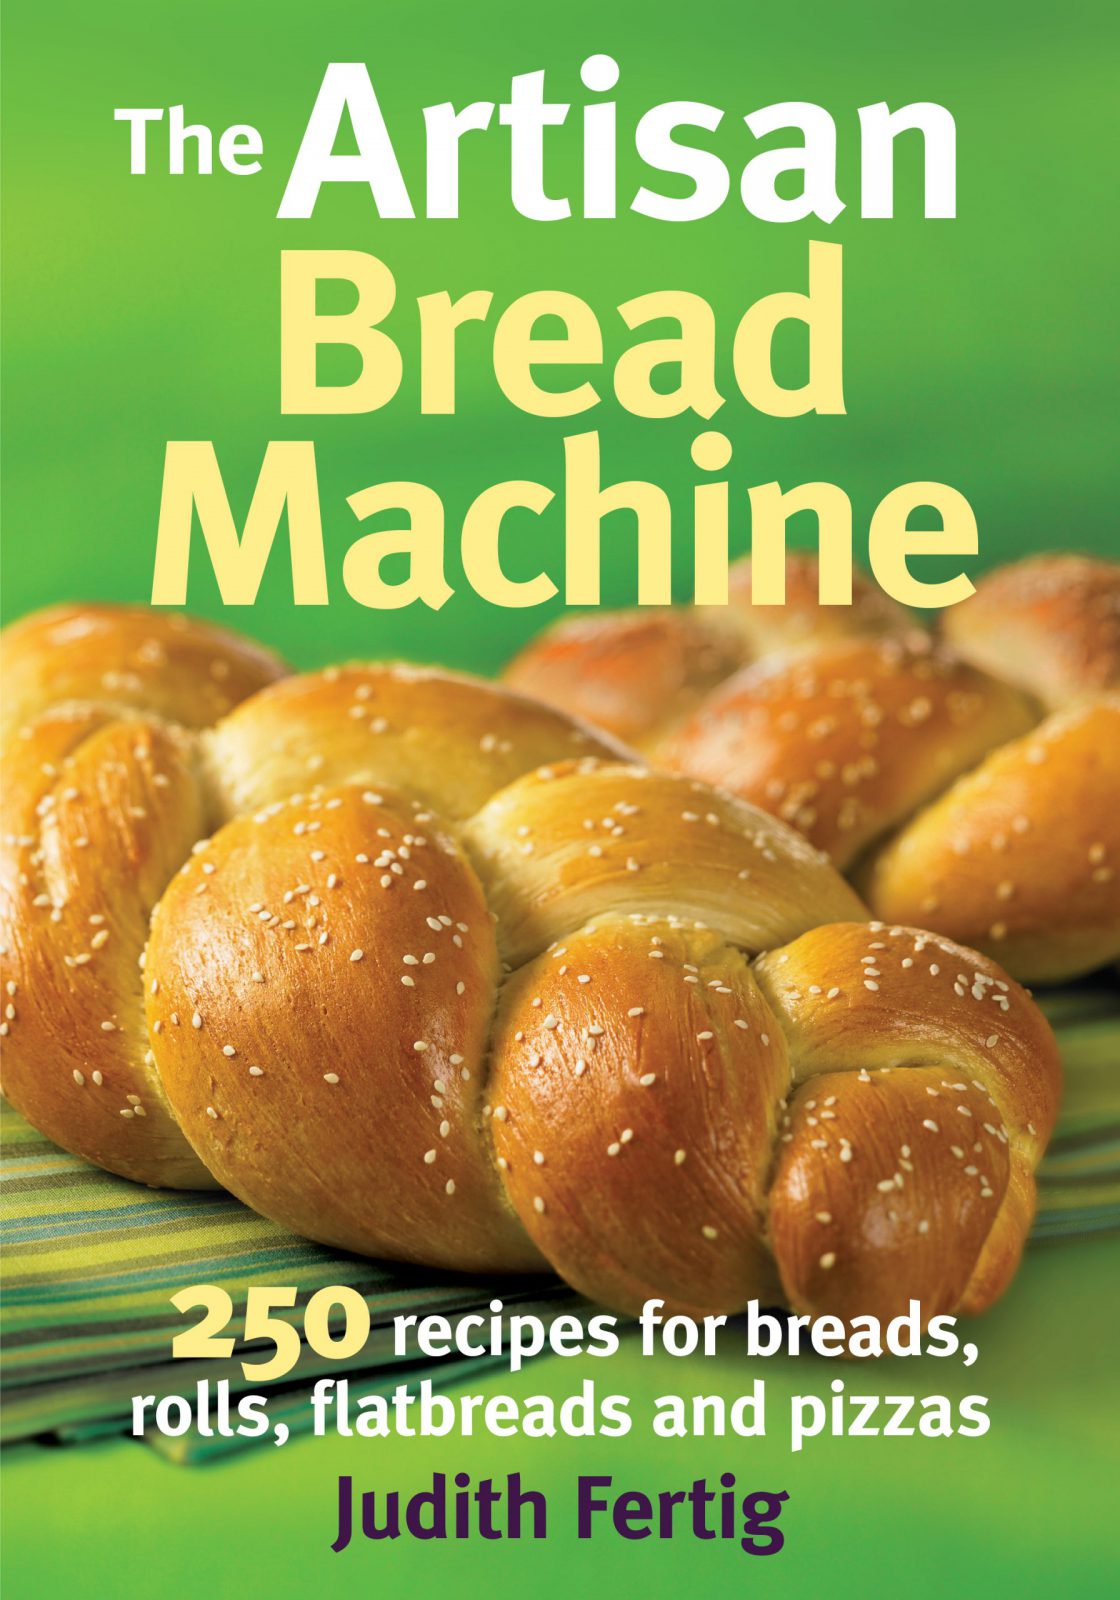 The Artisan Bread Machine